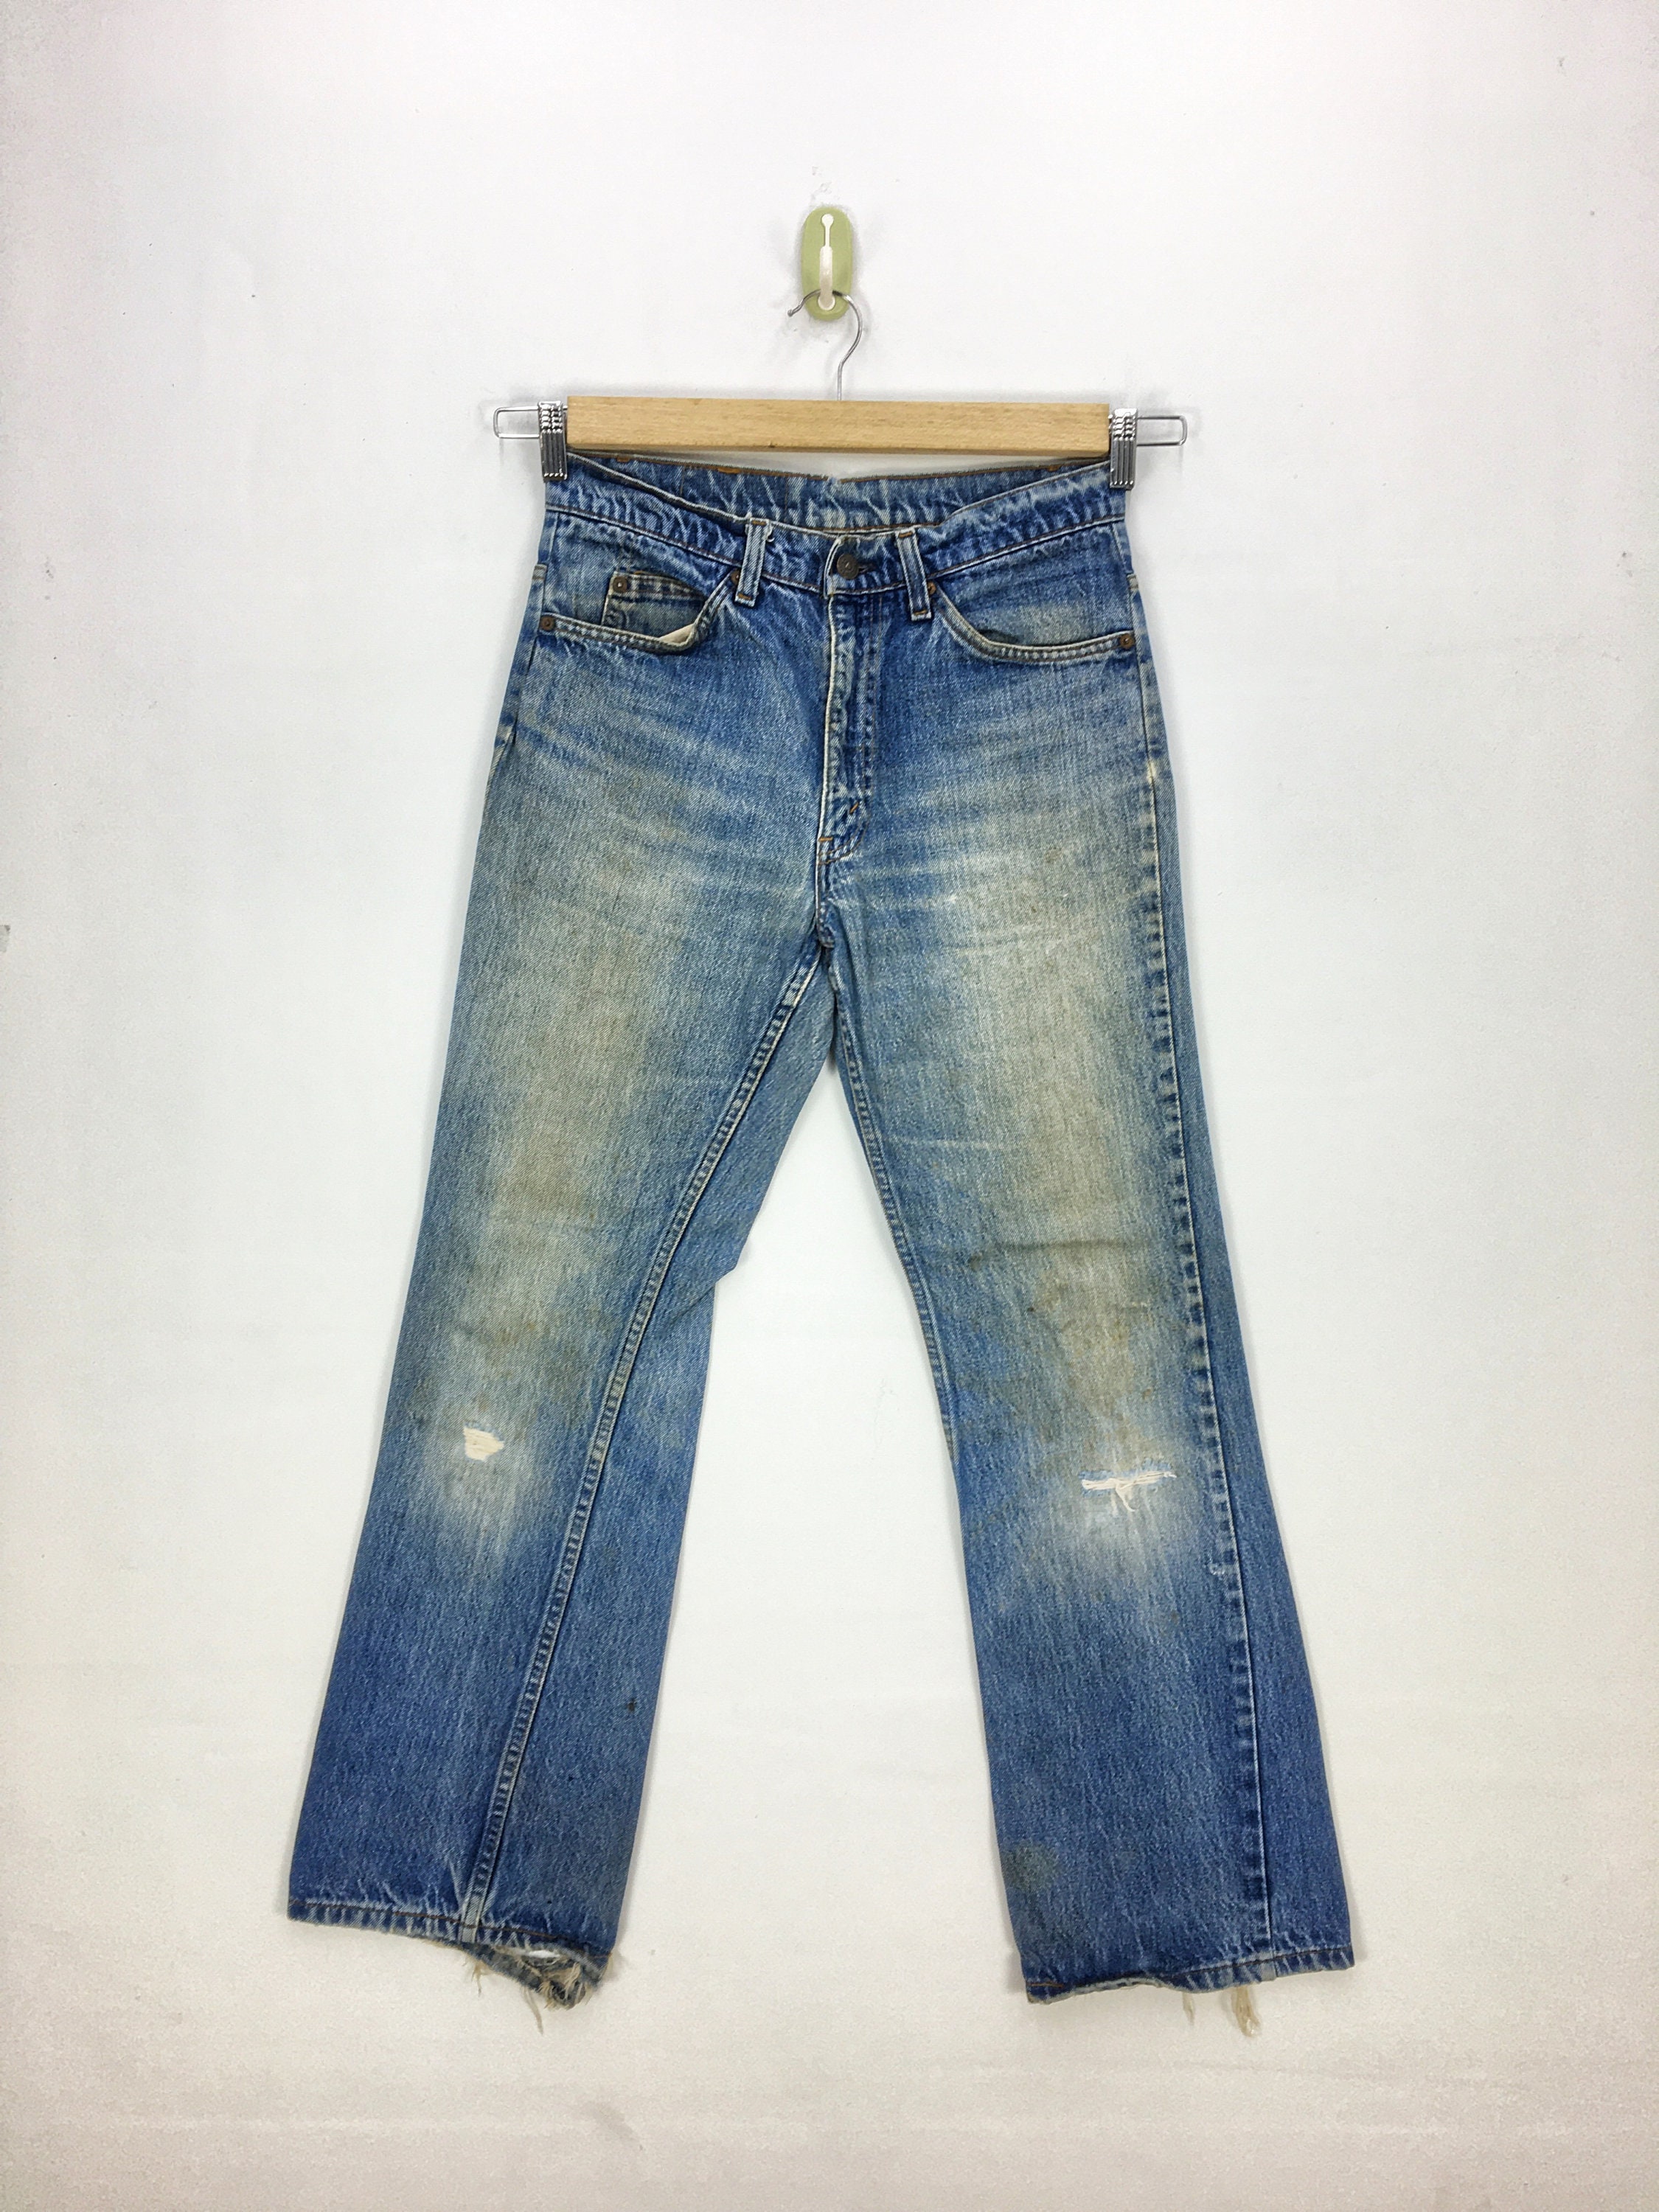 W30 Vintage Levis 517 Jeans Pants Levi's 517 Orange Tab - Etsy Denmark